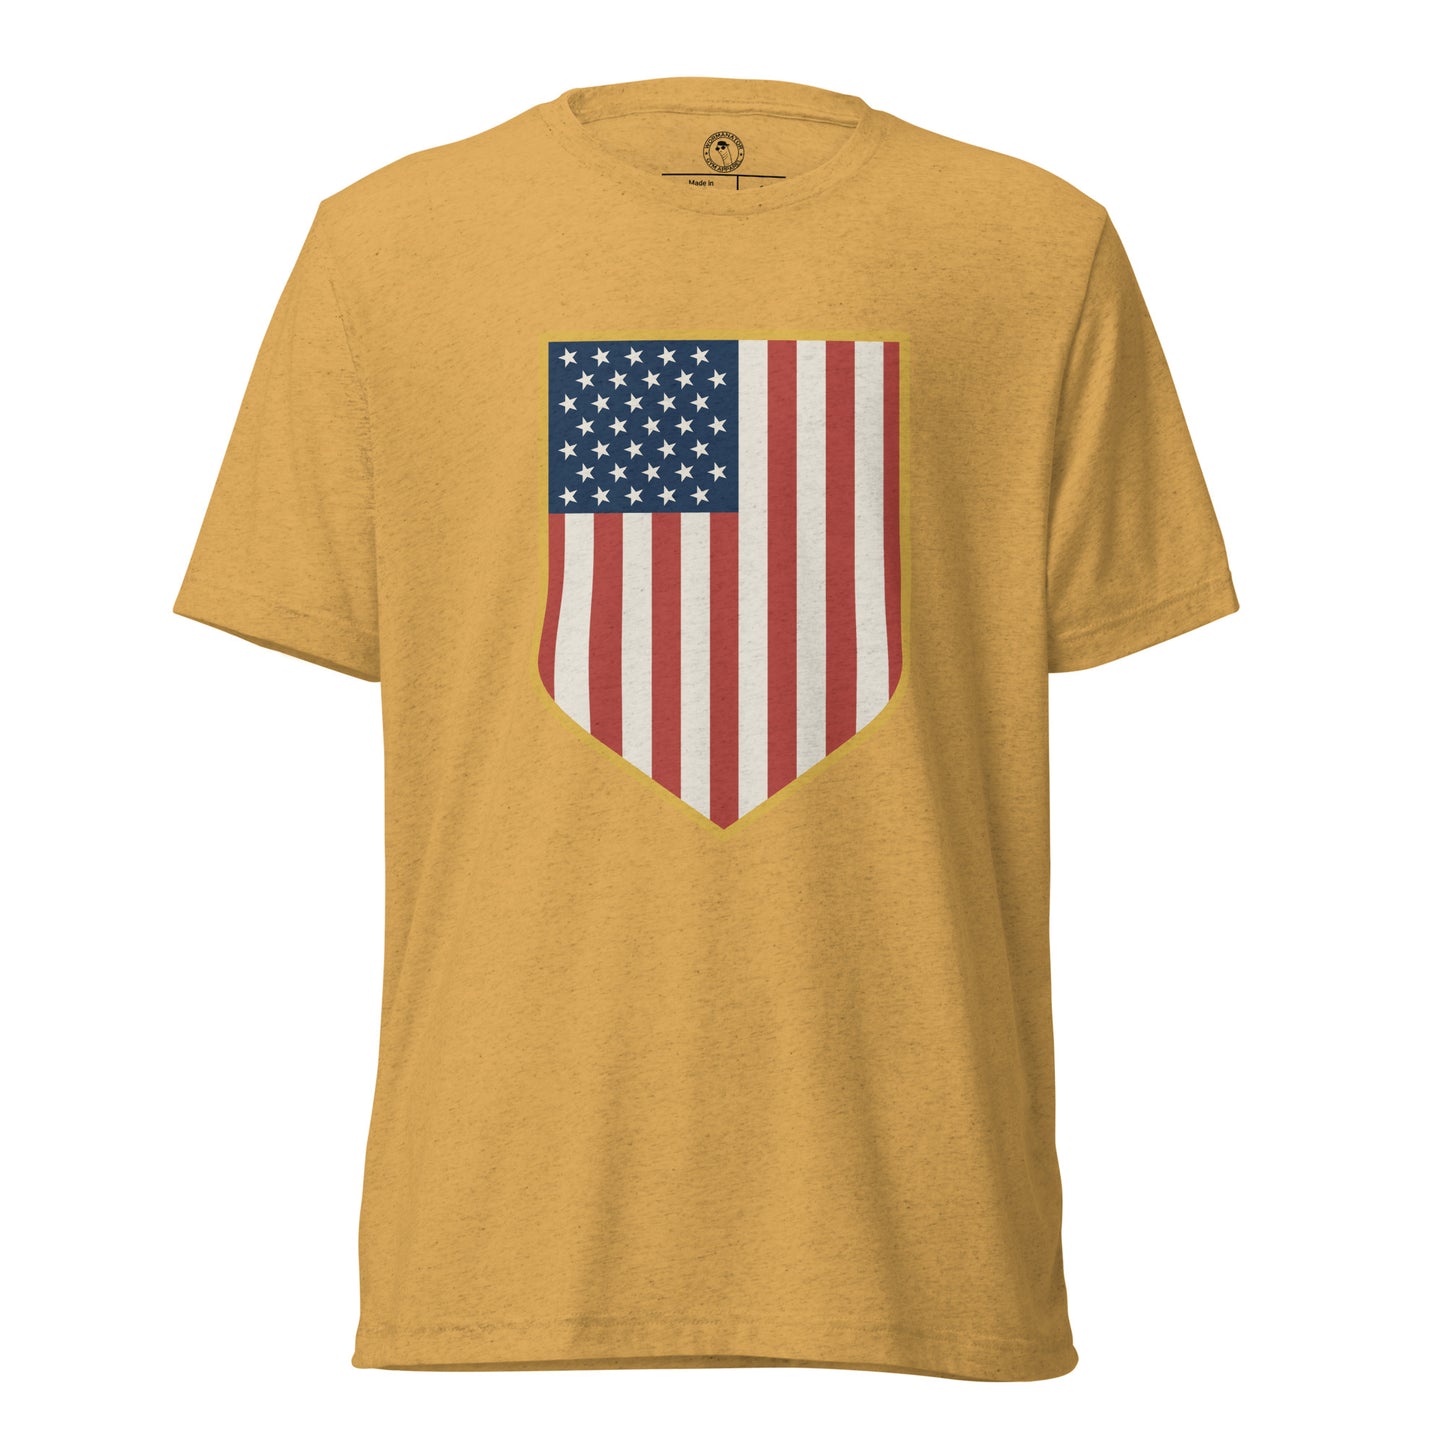 General Patton Shirt in Mustard Triblend